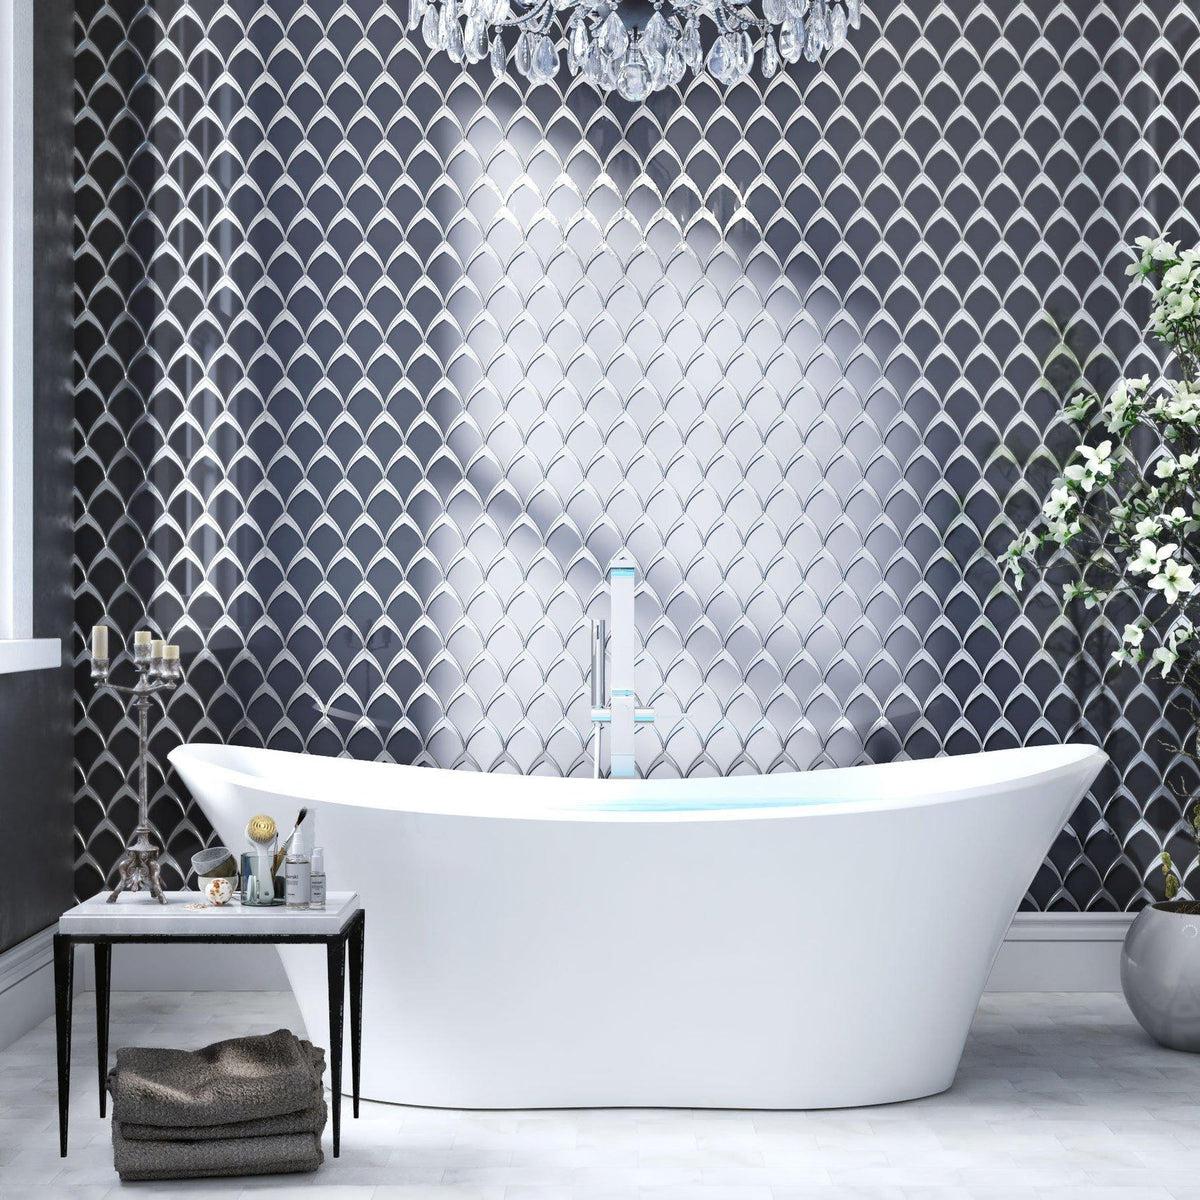 Gray Deco Fan Glass Mosaic Tile Bathtub Surround for an Elegant Soaking Tub